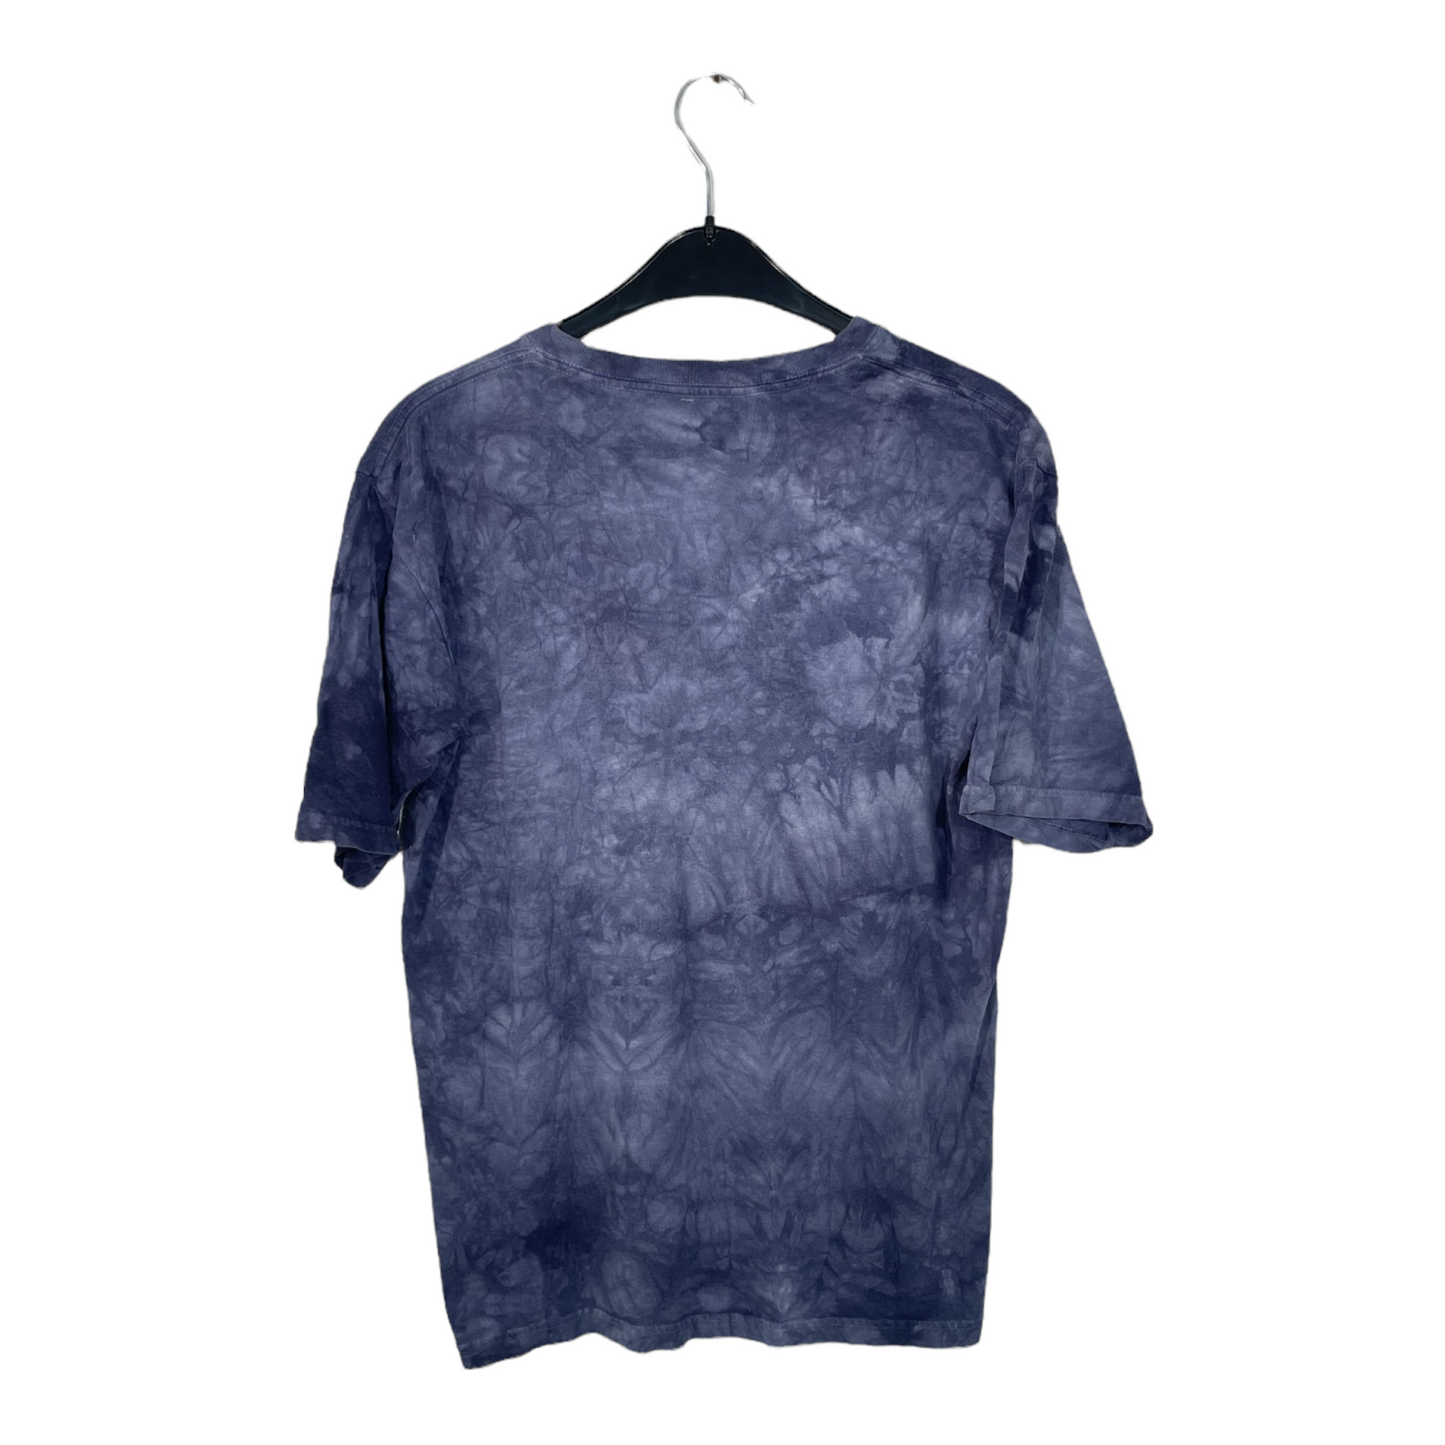 The Mountain "Blue Pug" T-Shirt